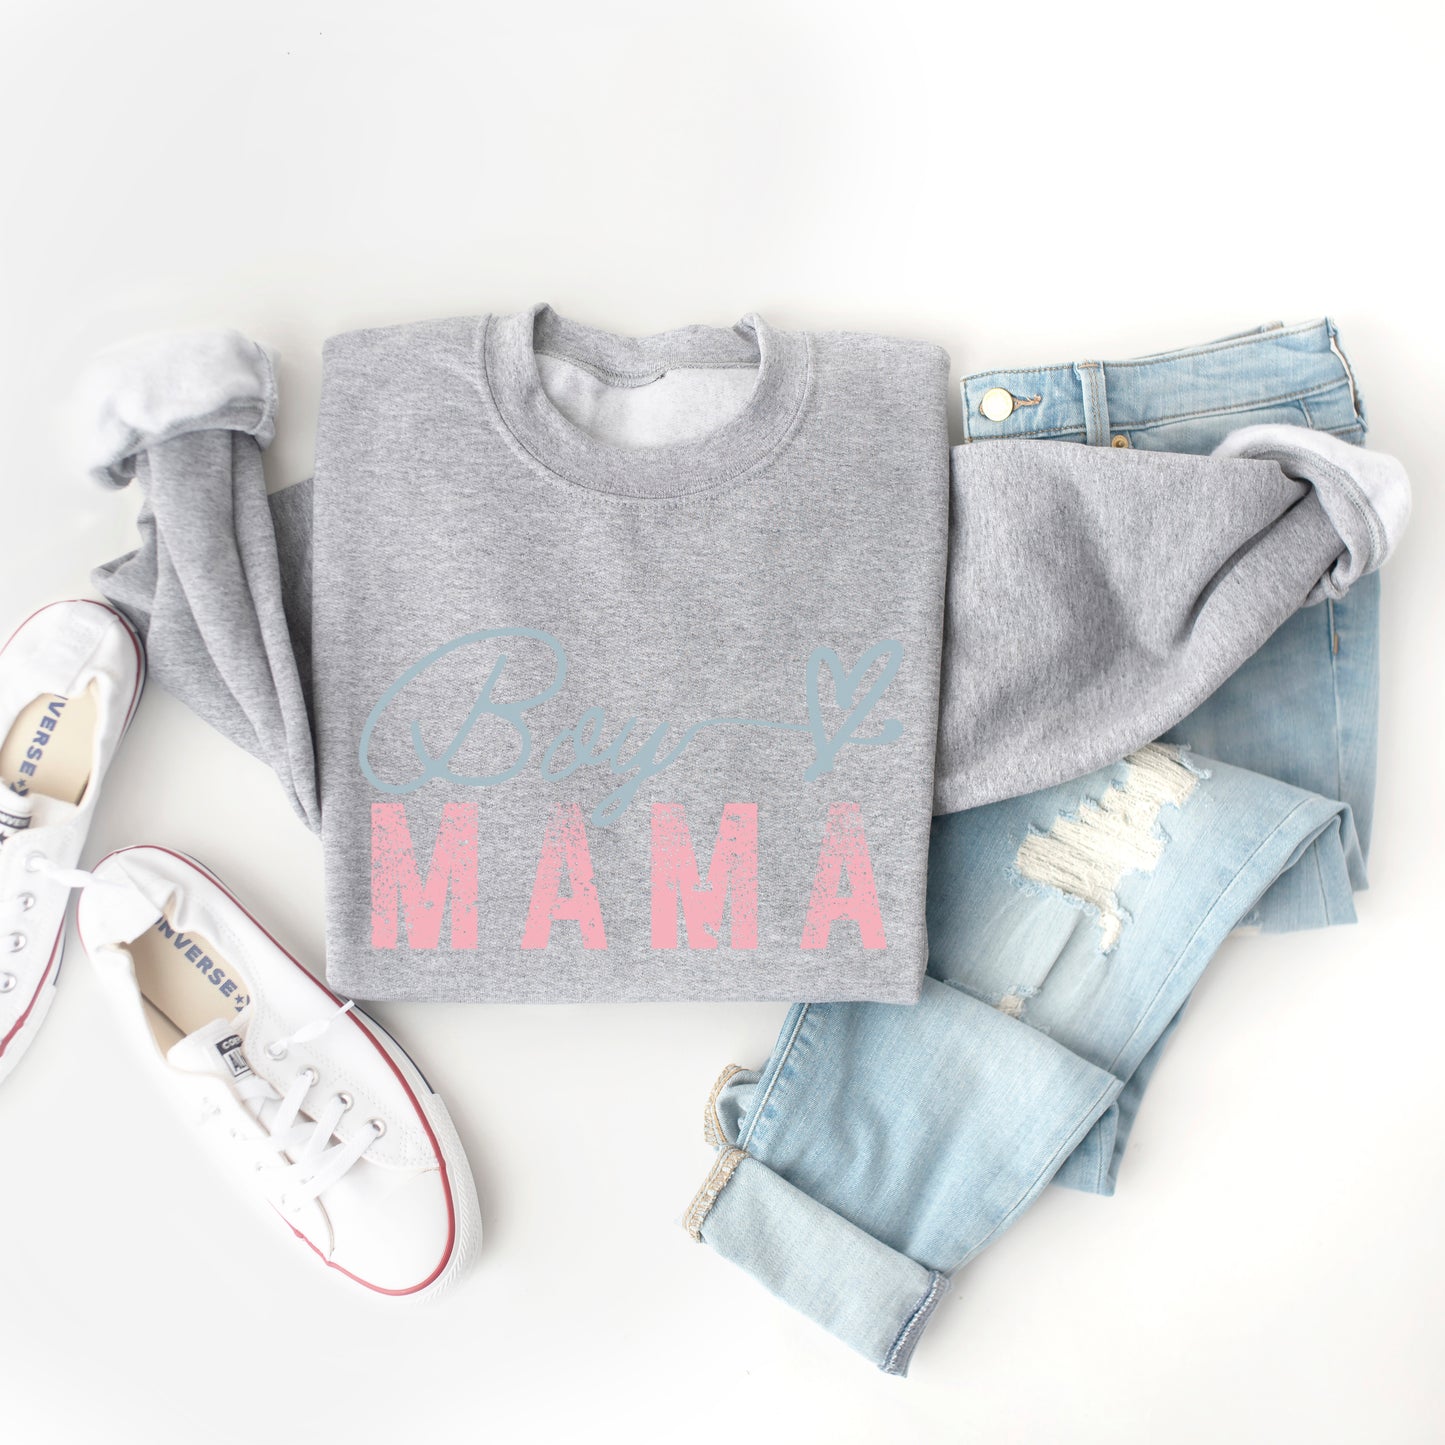 Boy Mama Heart Colorful | Sweatshirt